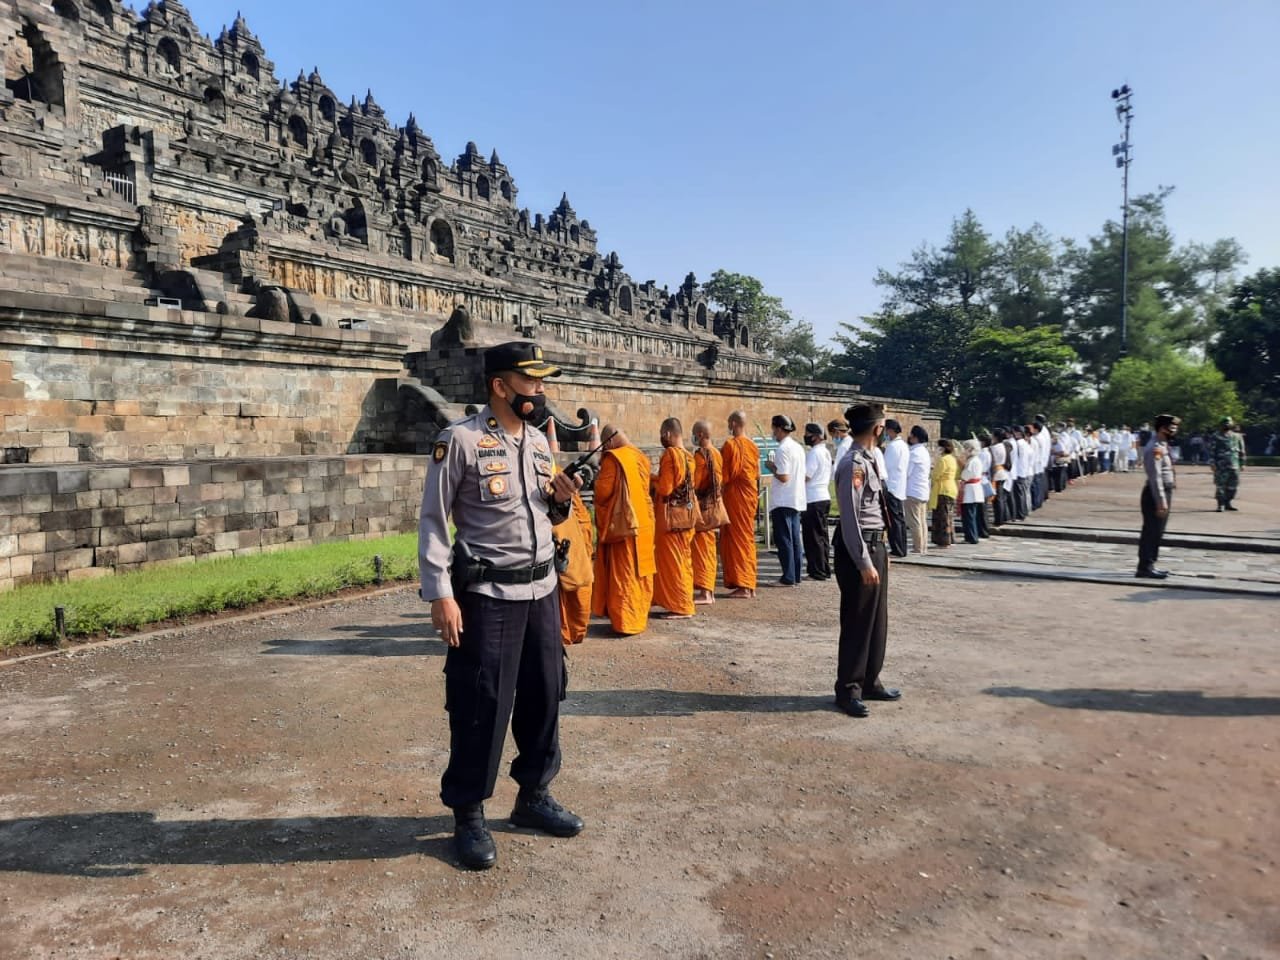 PENGAMANAN. Polres Magelang dalam kegiatan Pengamanan Upassata Manggala Krida di Candi Borobudur.